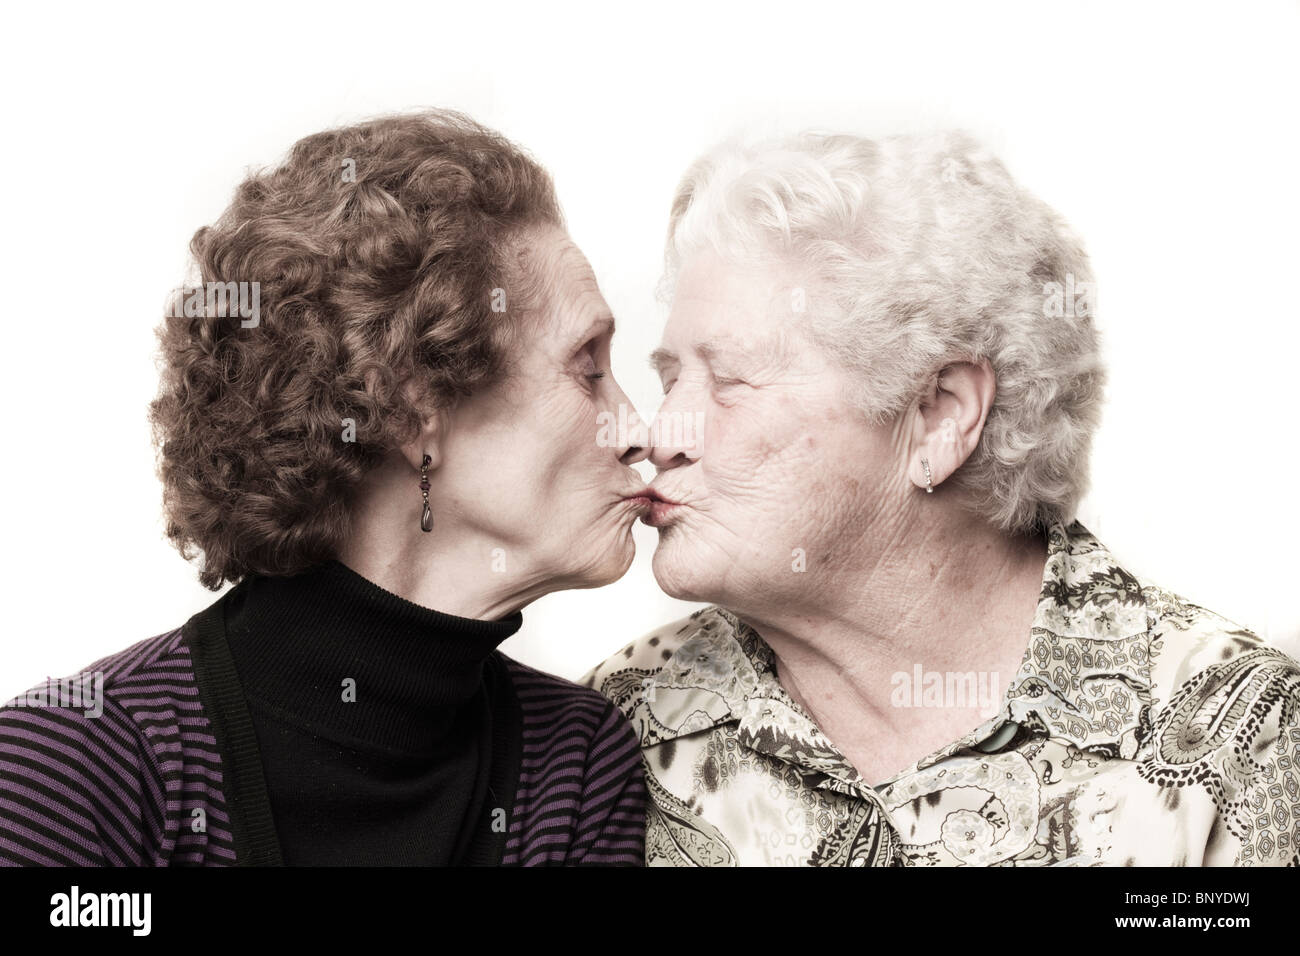 Older kiss